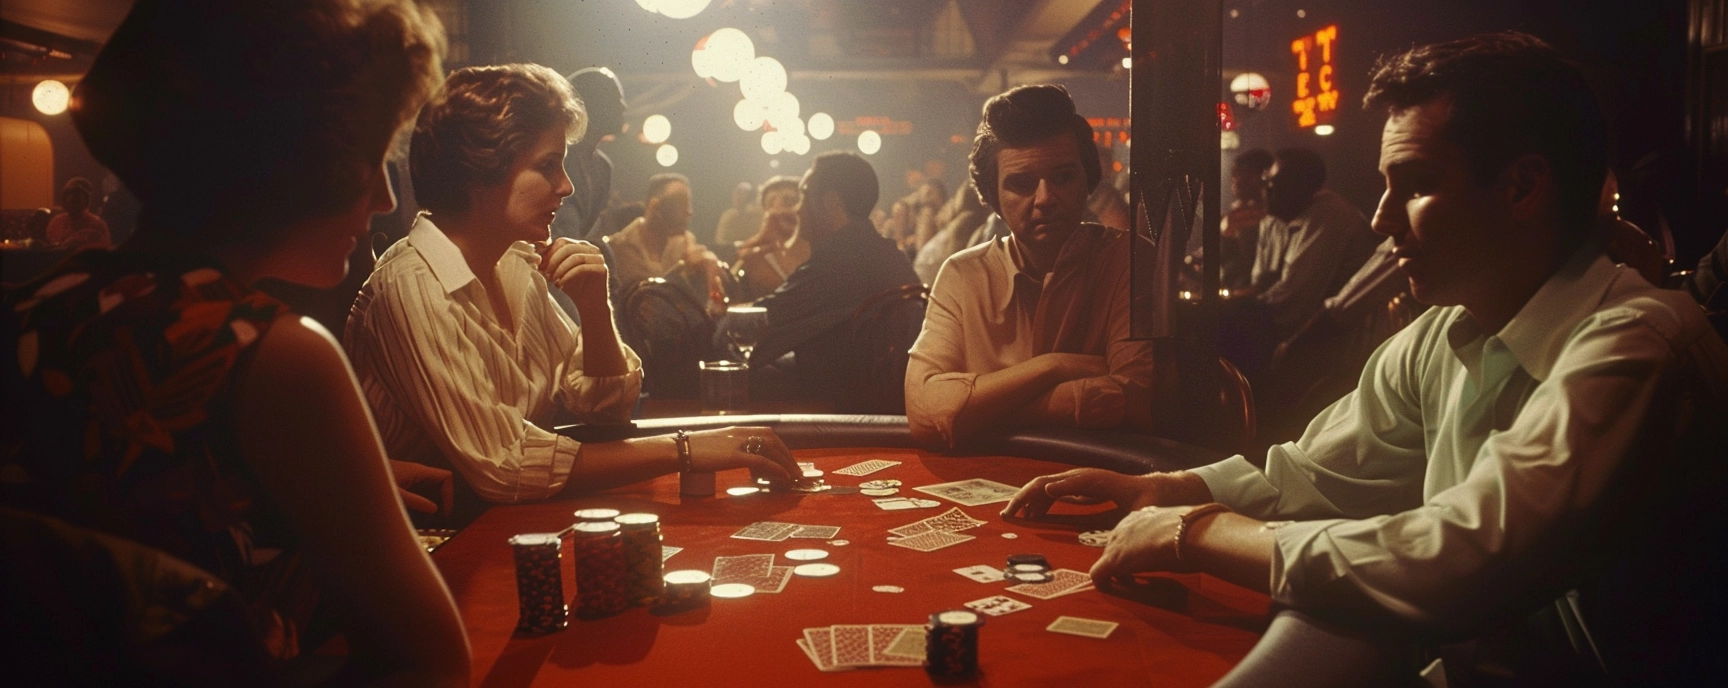 Vintage poker in PA photo image